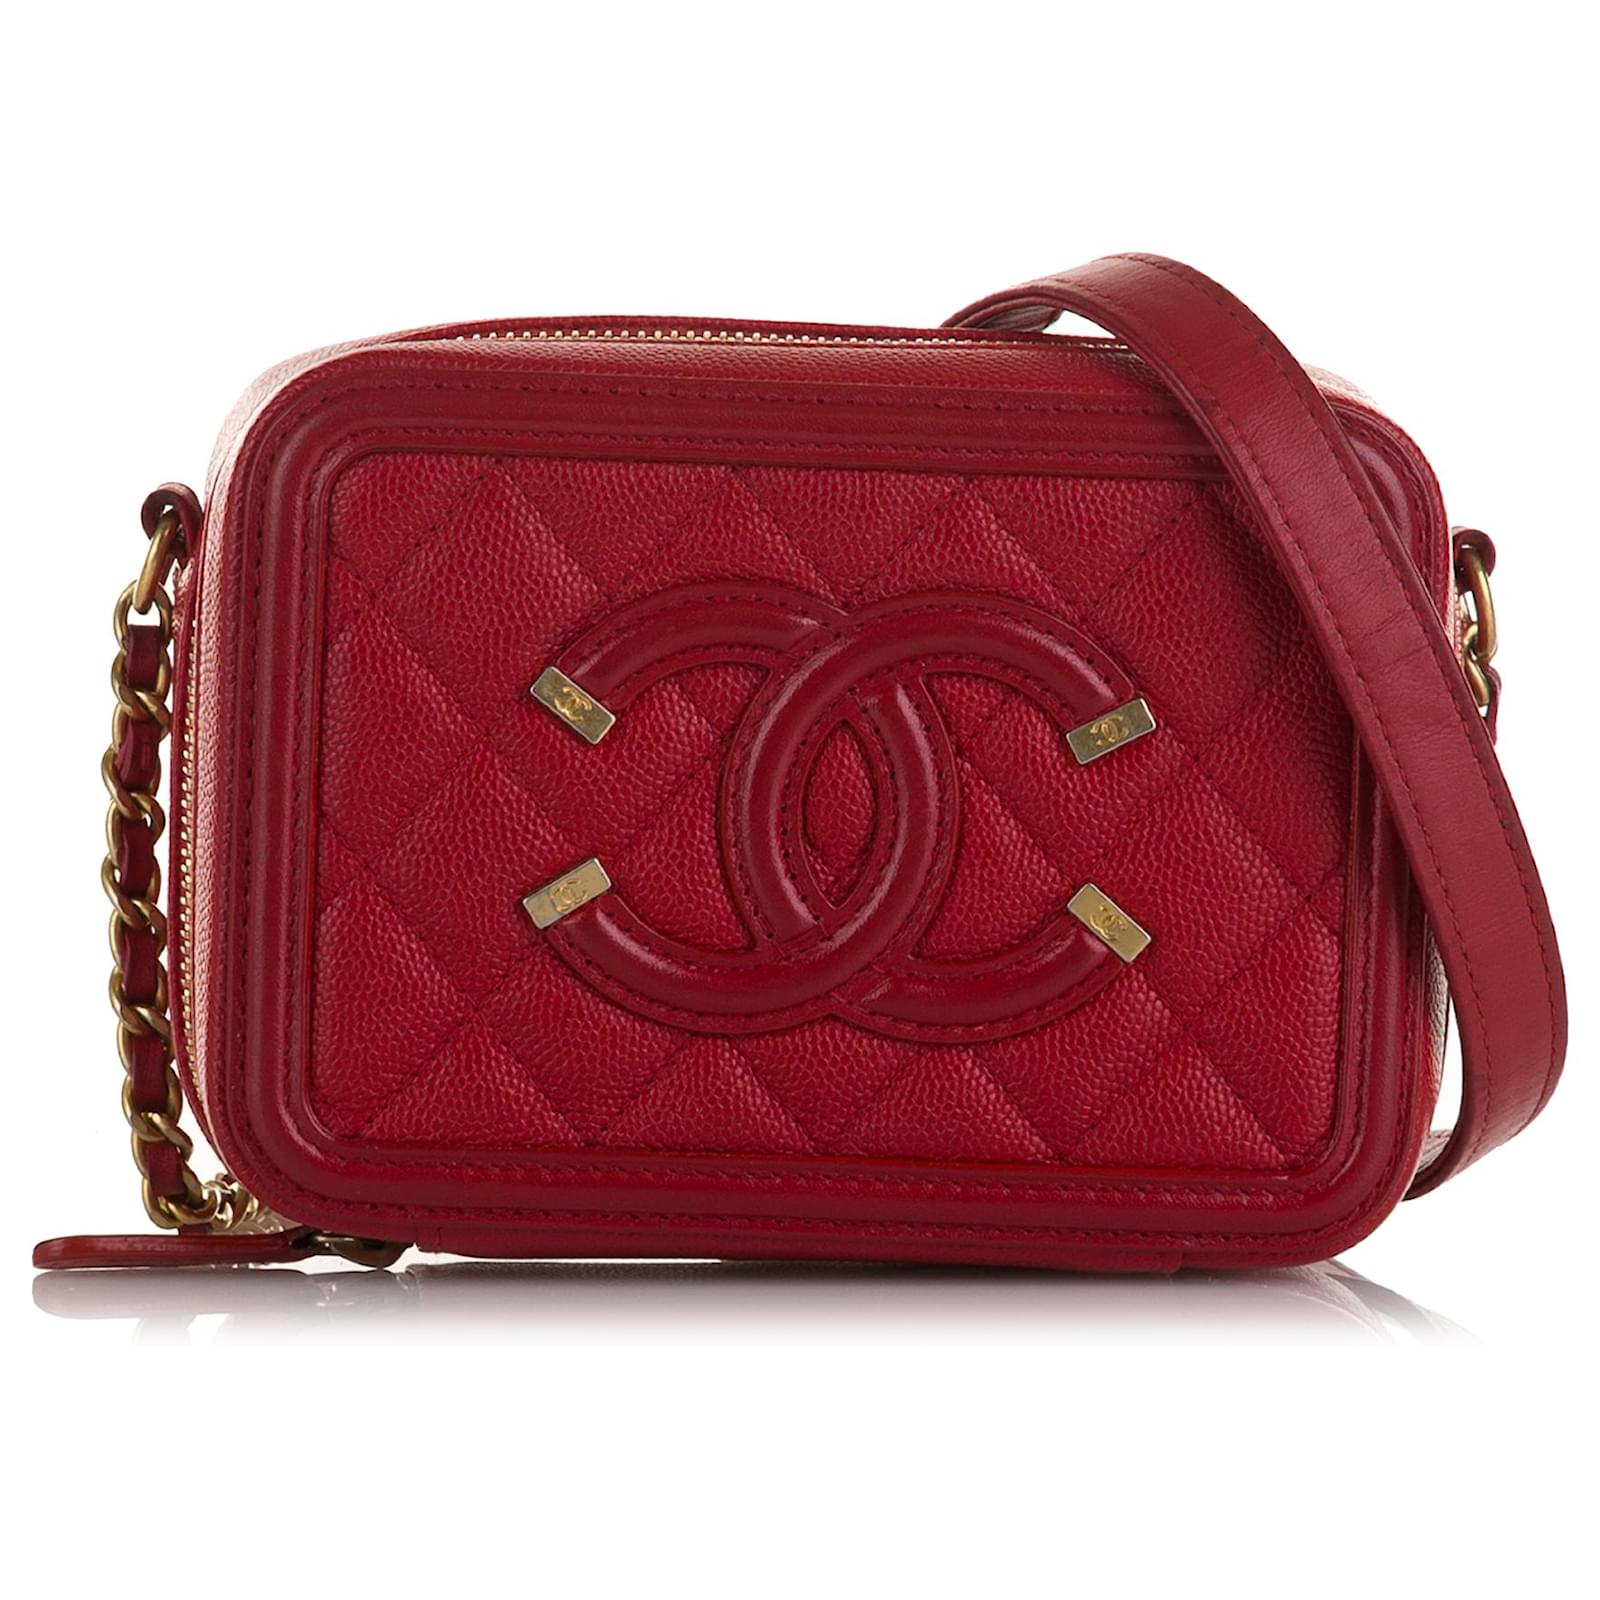 Red Chanel Caviar CC Lunch Box Vanity Case – Designer Revival